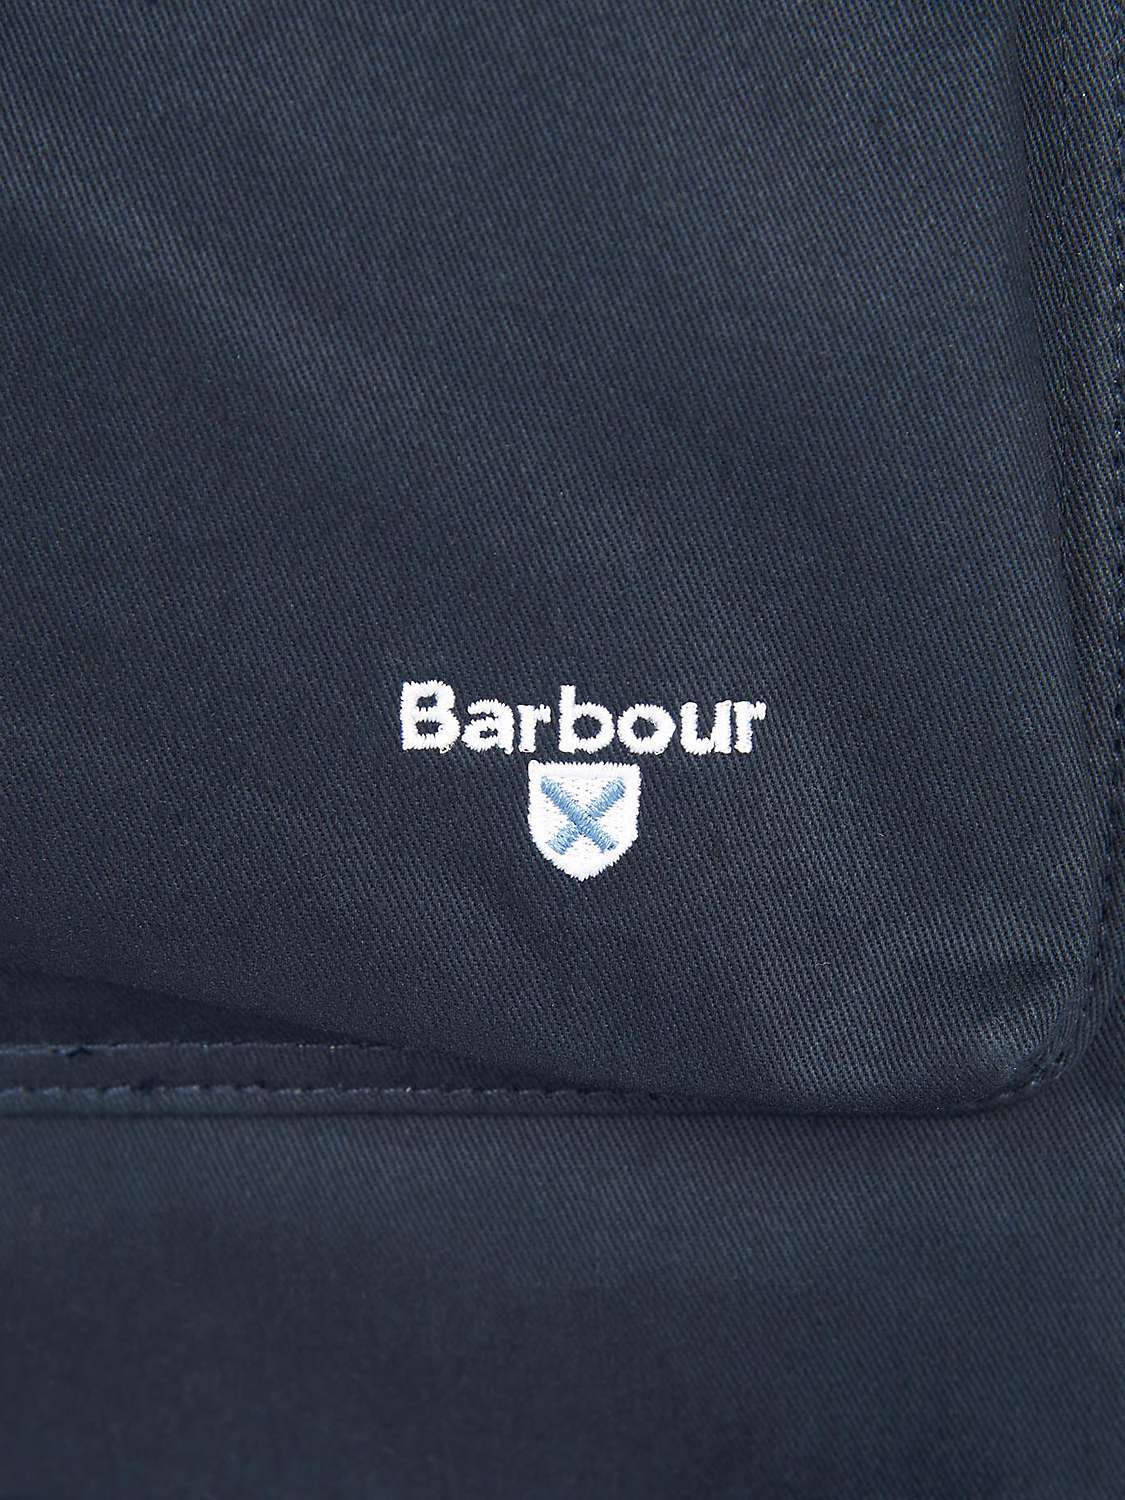 Buy Barbour Cascade Backpack, Navy Online at johnlewis.com